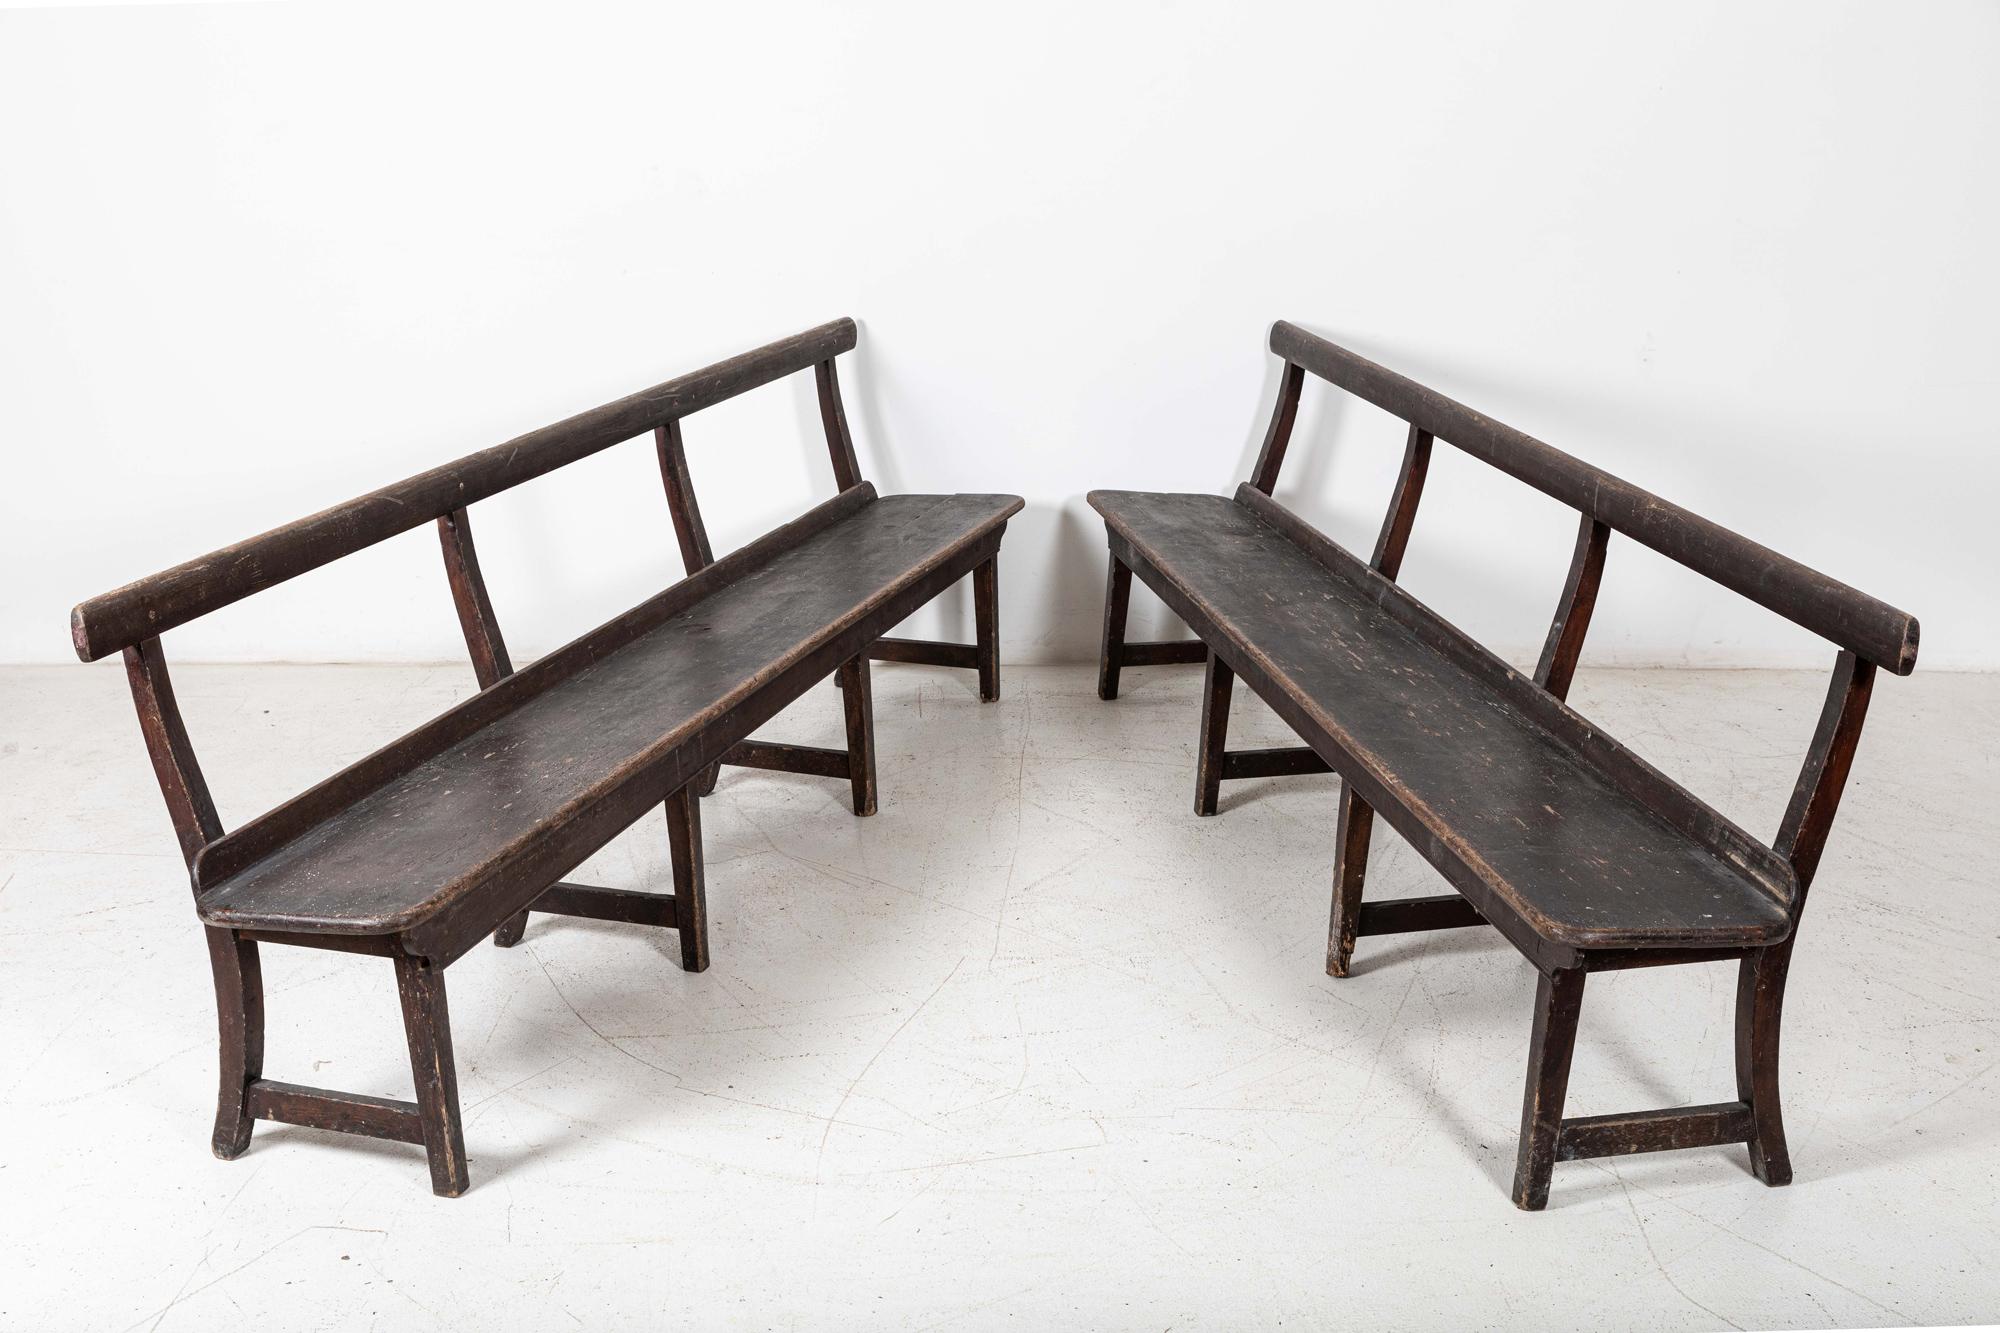 Circa 1880
Pair 19thC English Pine Chapel benches in original finish
Price per pair
(vat qualifying )
(3 pairs available)
W240 x D37 x H80 cm
Seat height 43 cm.
 